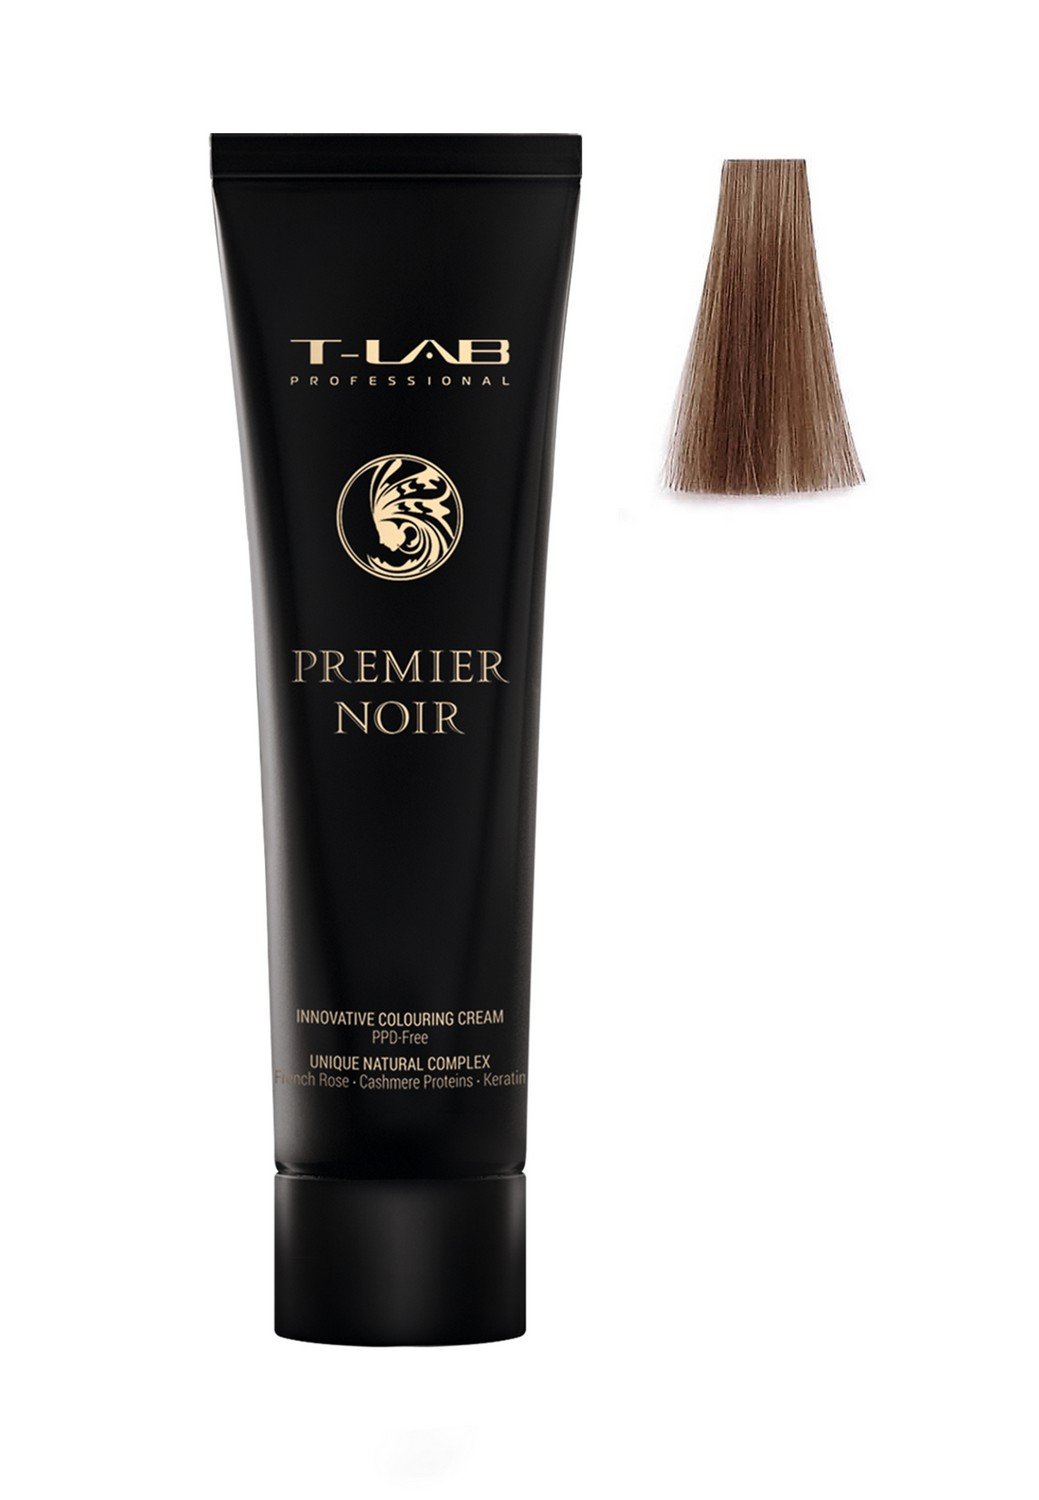 Крем-фарба T-LAB Professional Premier Noir colouring cream, відтінок 9.25 (very light iridescent mahogany blonde) - фото 2